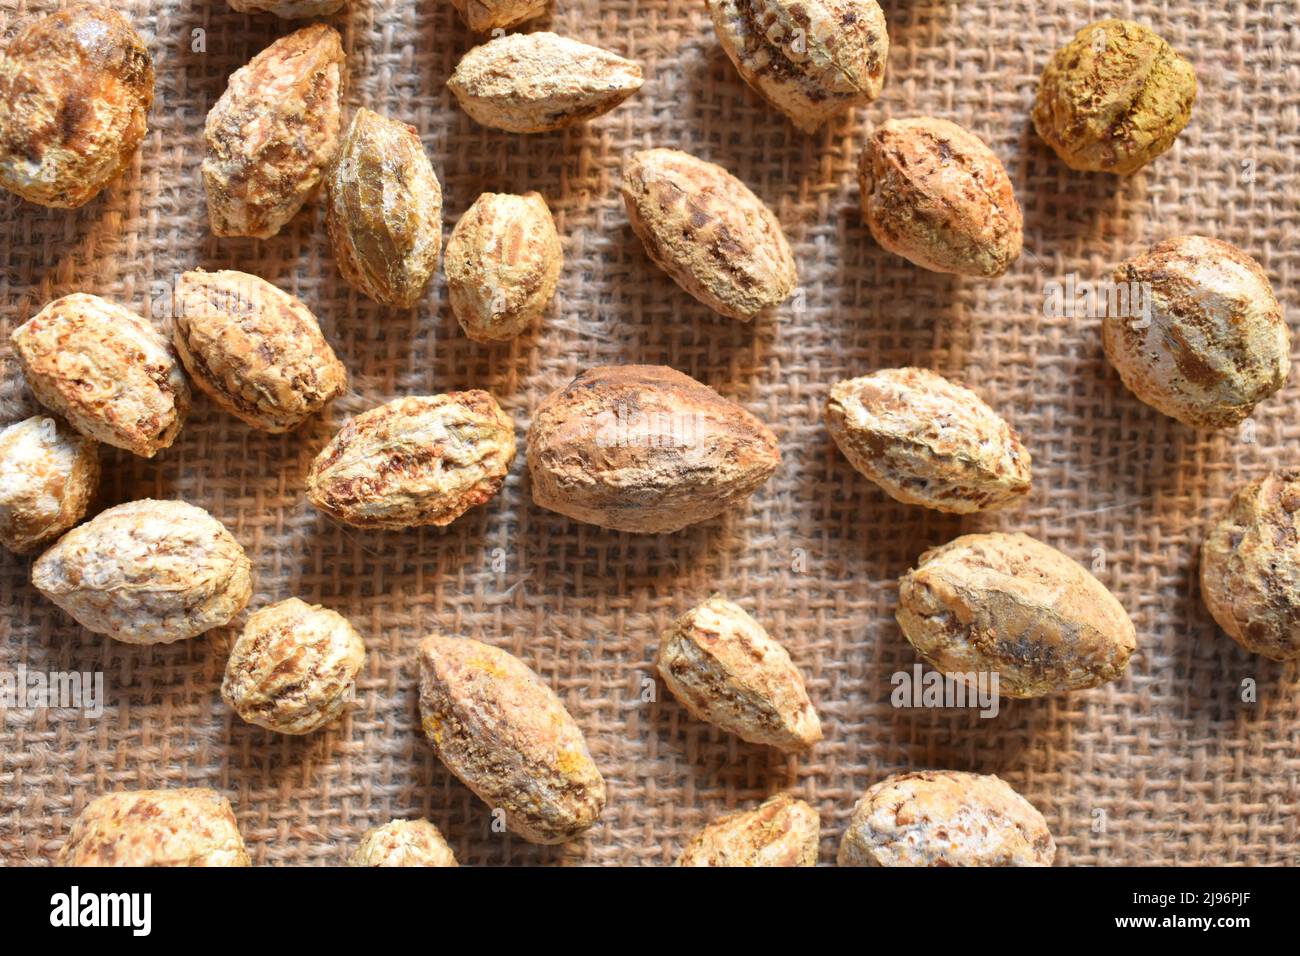 Raw whole dry seed of Terminalia chebula fruit Stock Photo